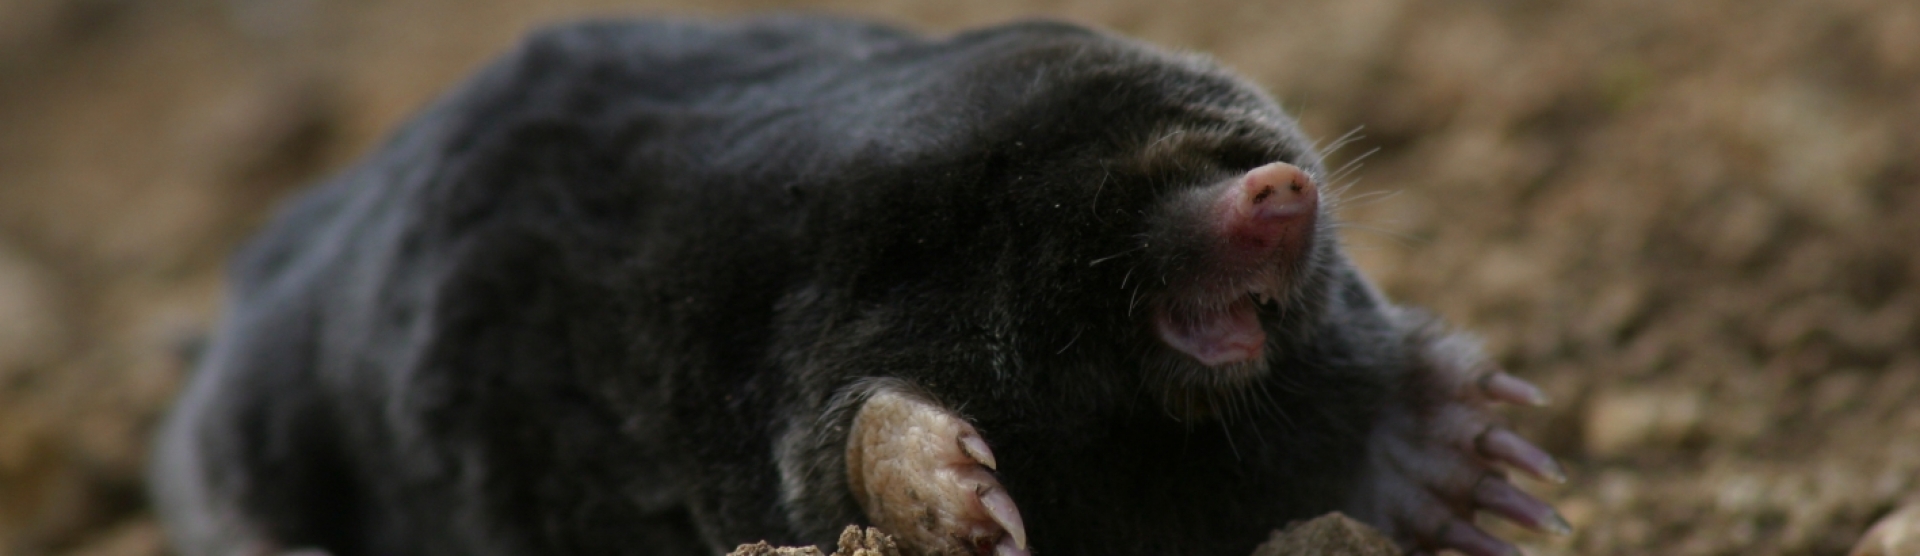 Mole by steve bottom for cornwall wildlife trust